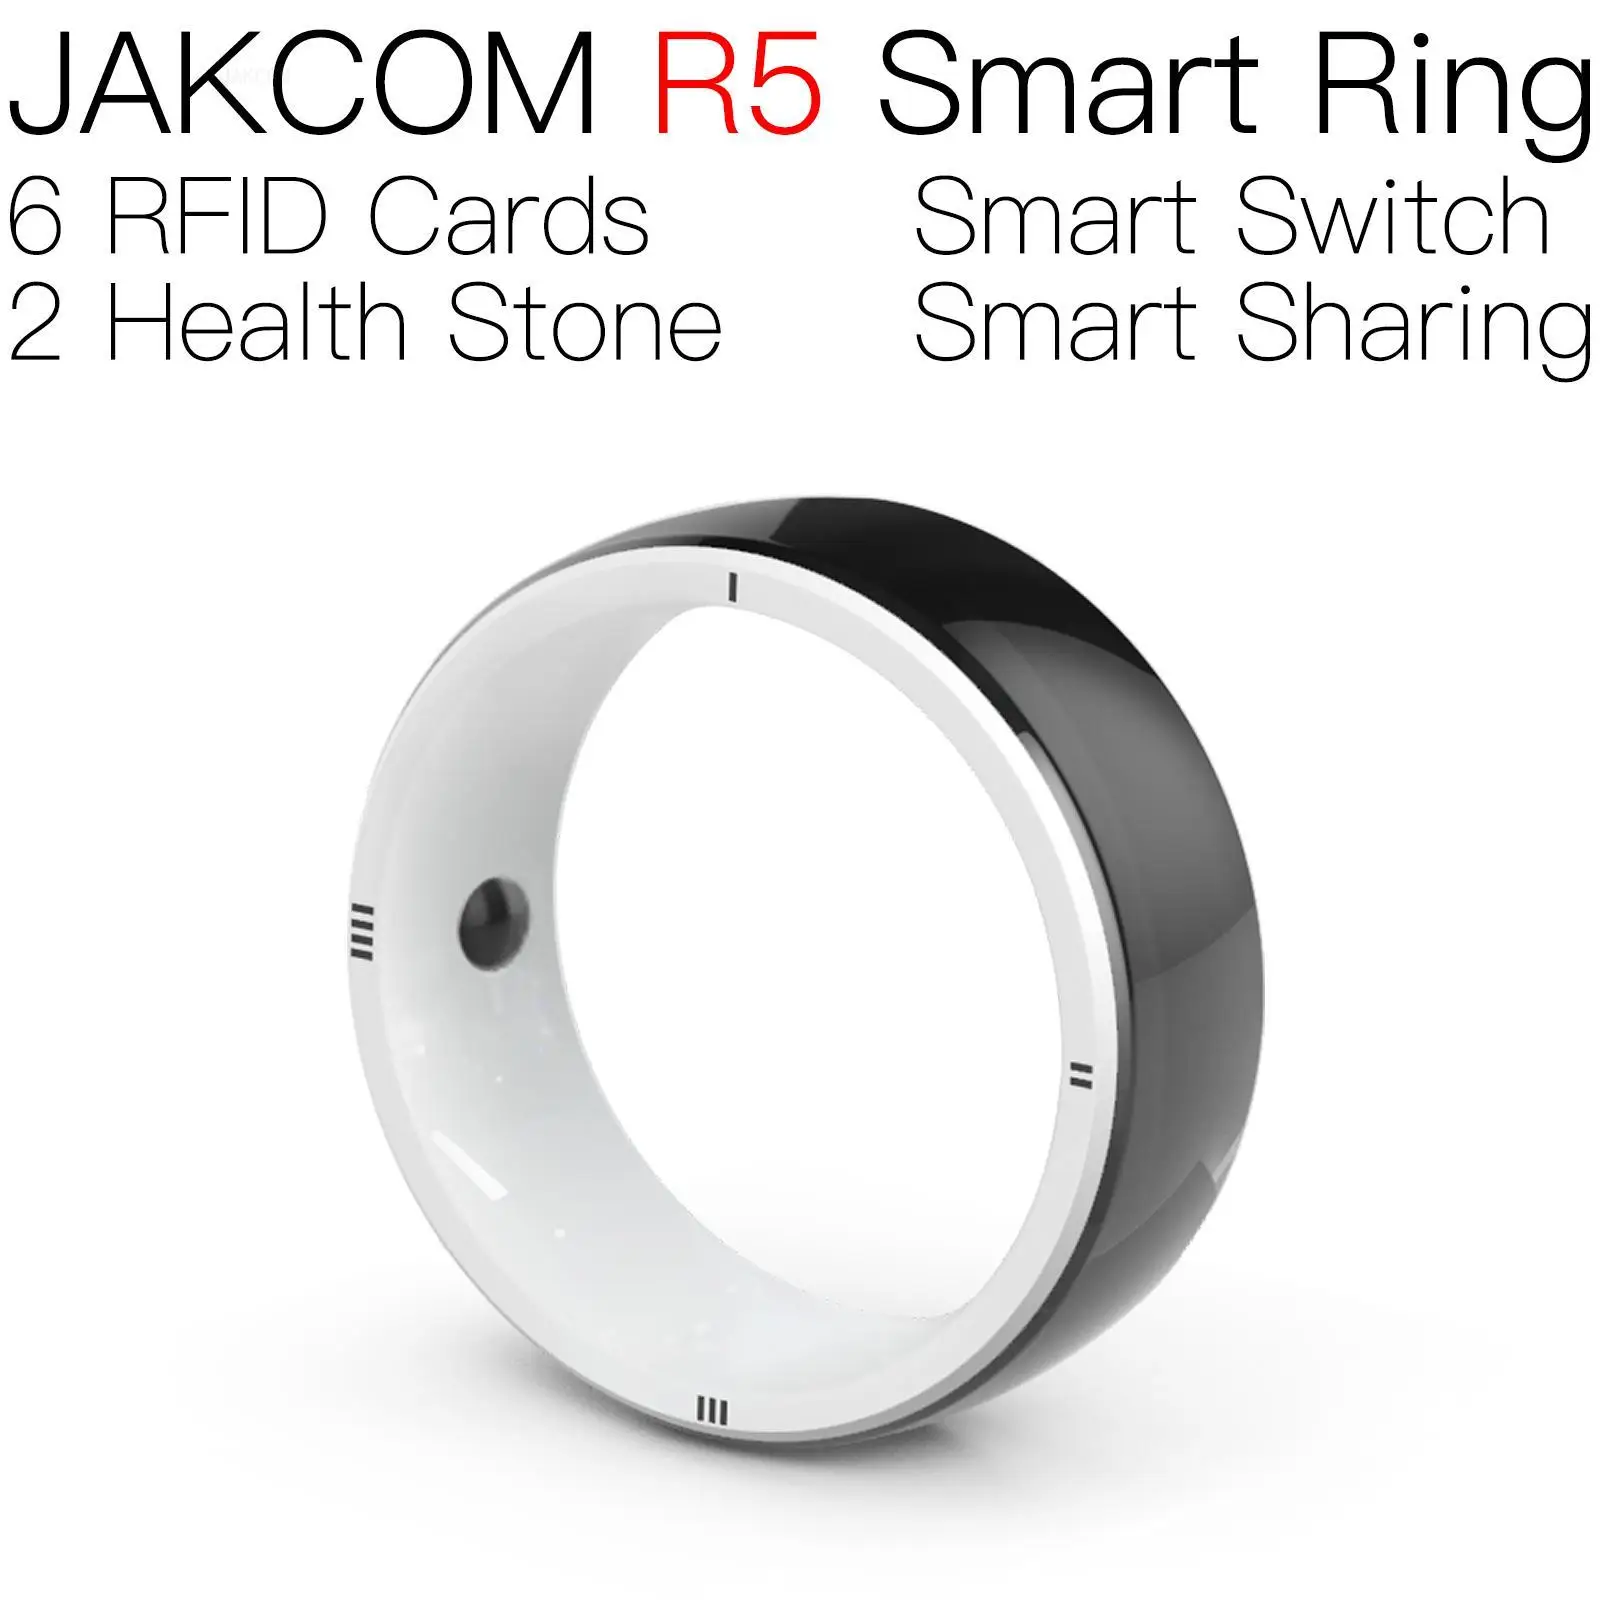 

JAKCOM R5 Smart Ring Super value than eco mode switch badge rfid uid modifiable mct a vigik ntag215 sticker pvc alex anigift